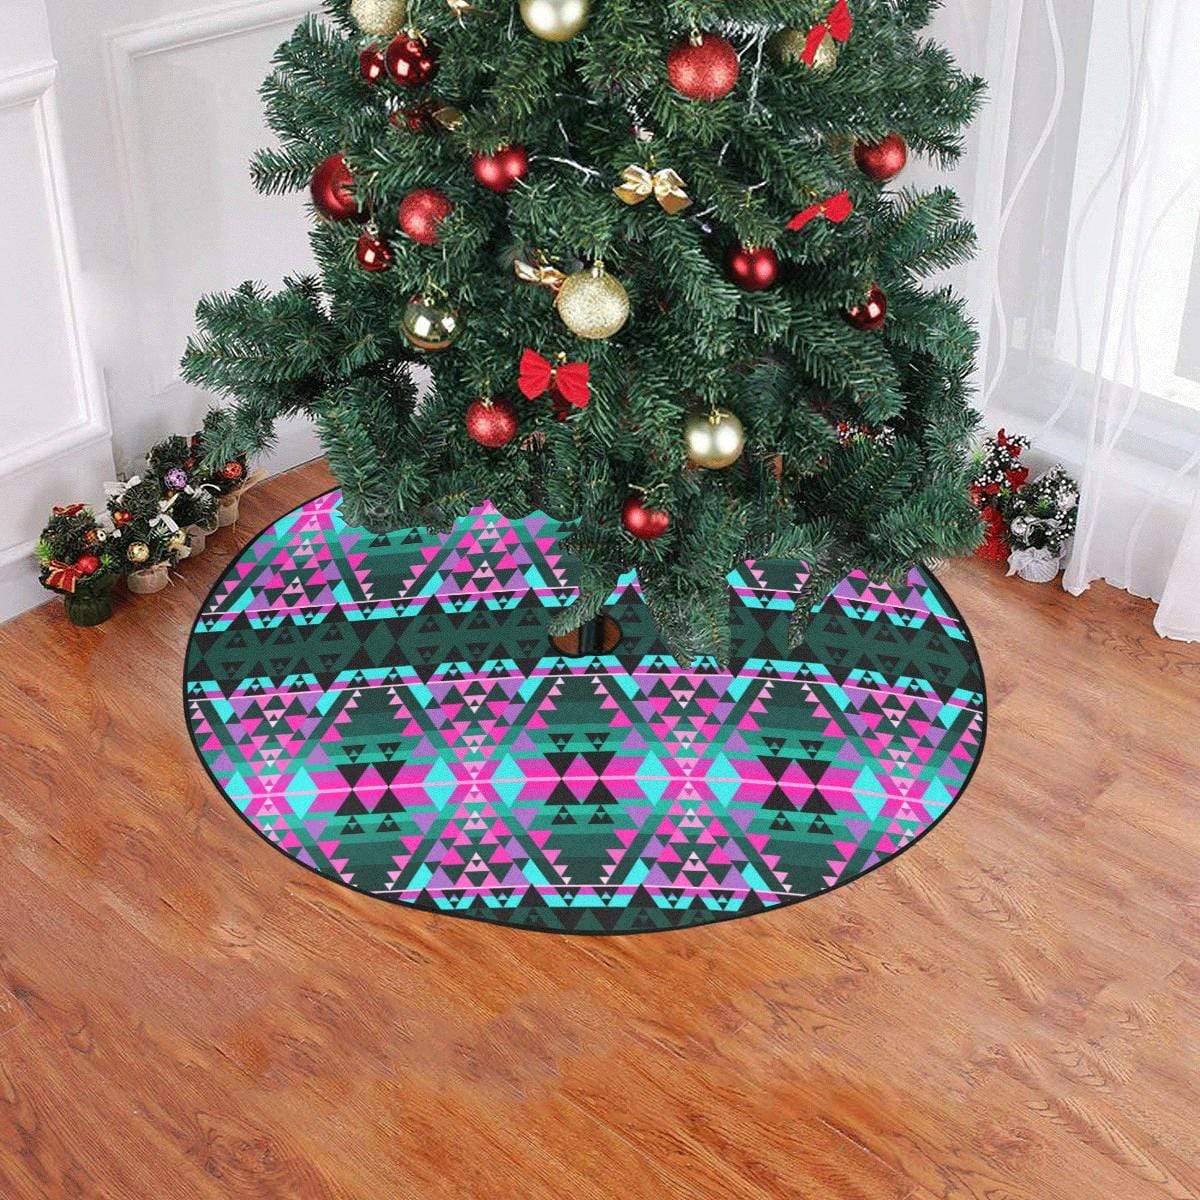 Writing on Stone Sunset Christmas Tree Skirt 47" x 47" Christmas Tree Skirt e-joyer 